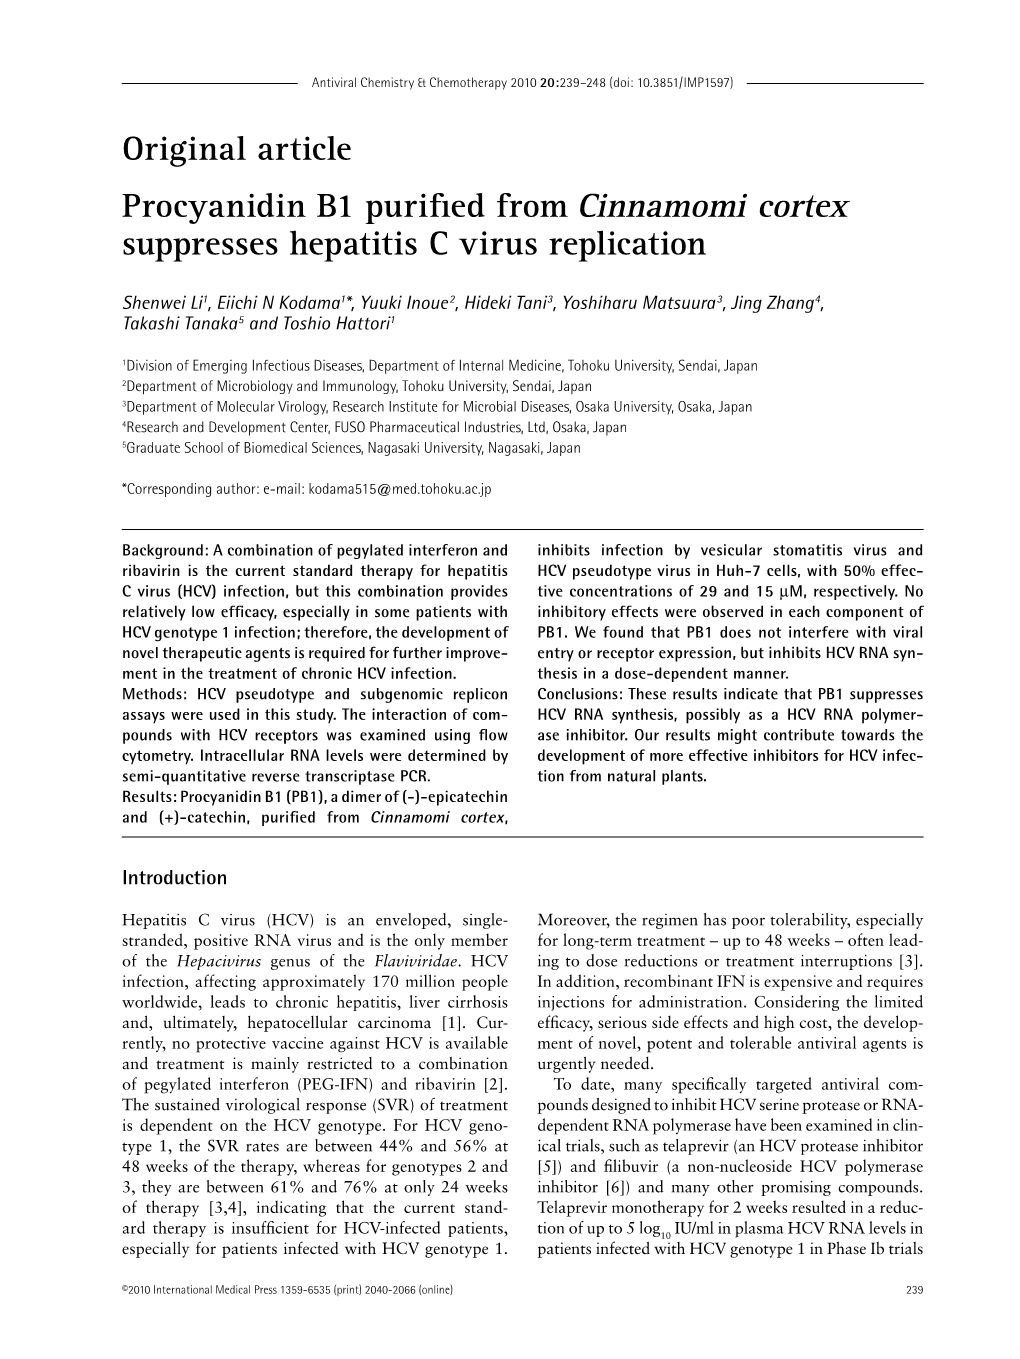 Original Article Procyanidin B1 Purified from Cinnamomi Cortex Suppresses Hepatitis C Virus Replication